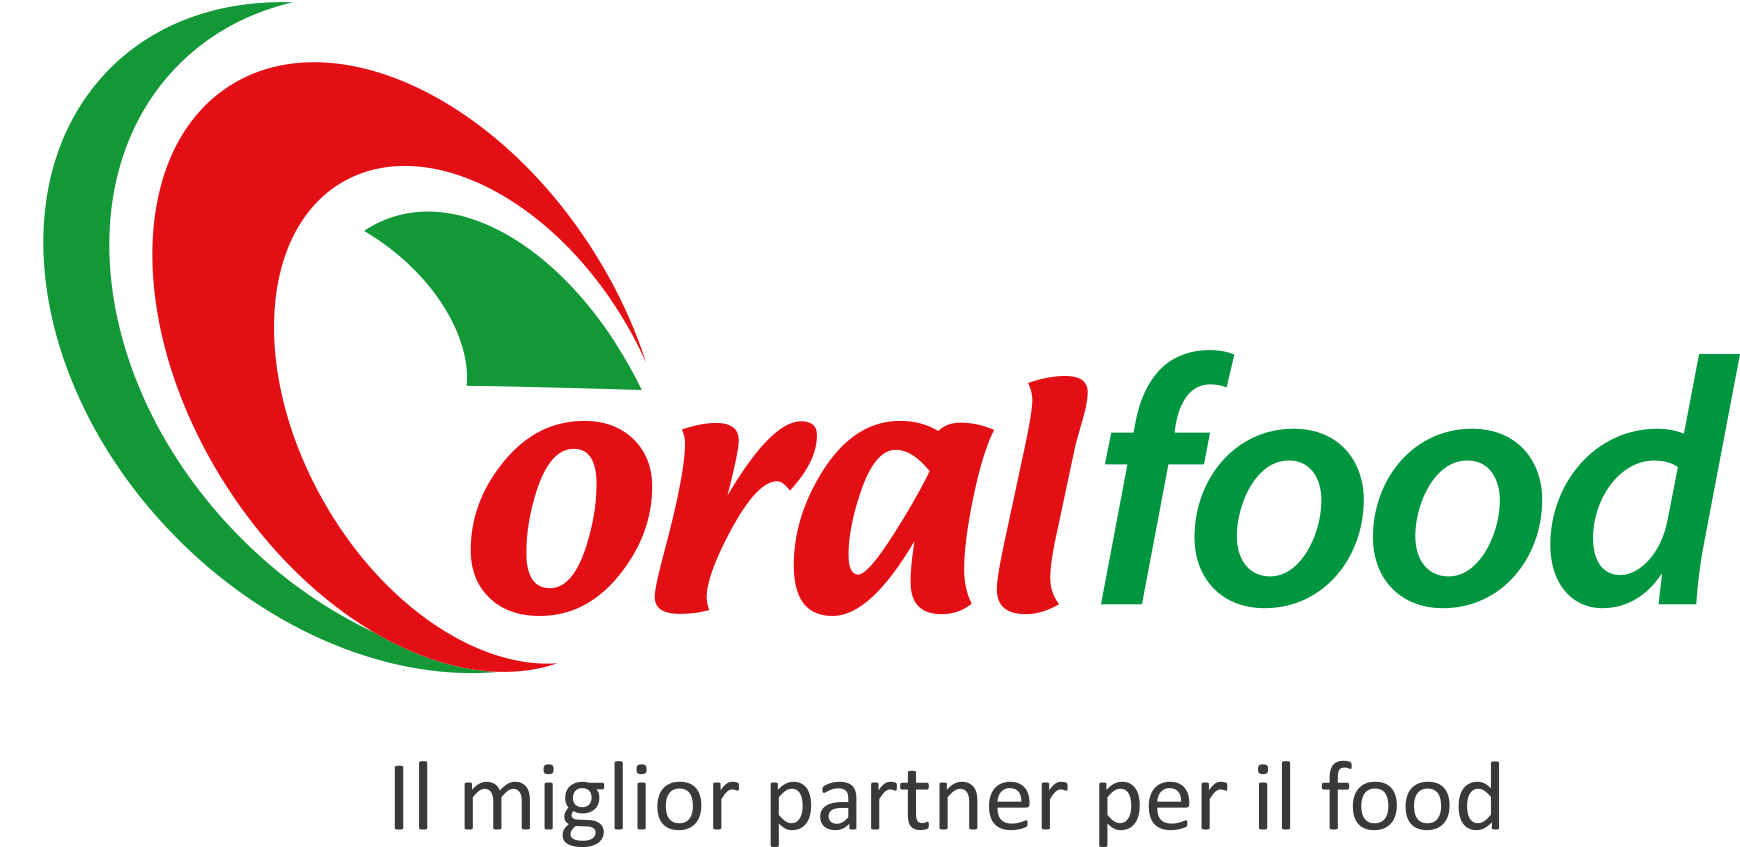 coral-food-logo-1629533534